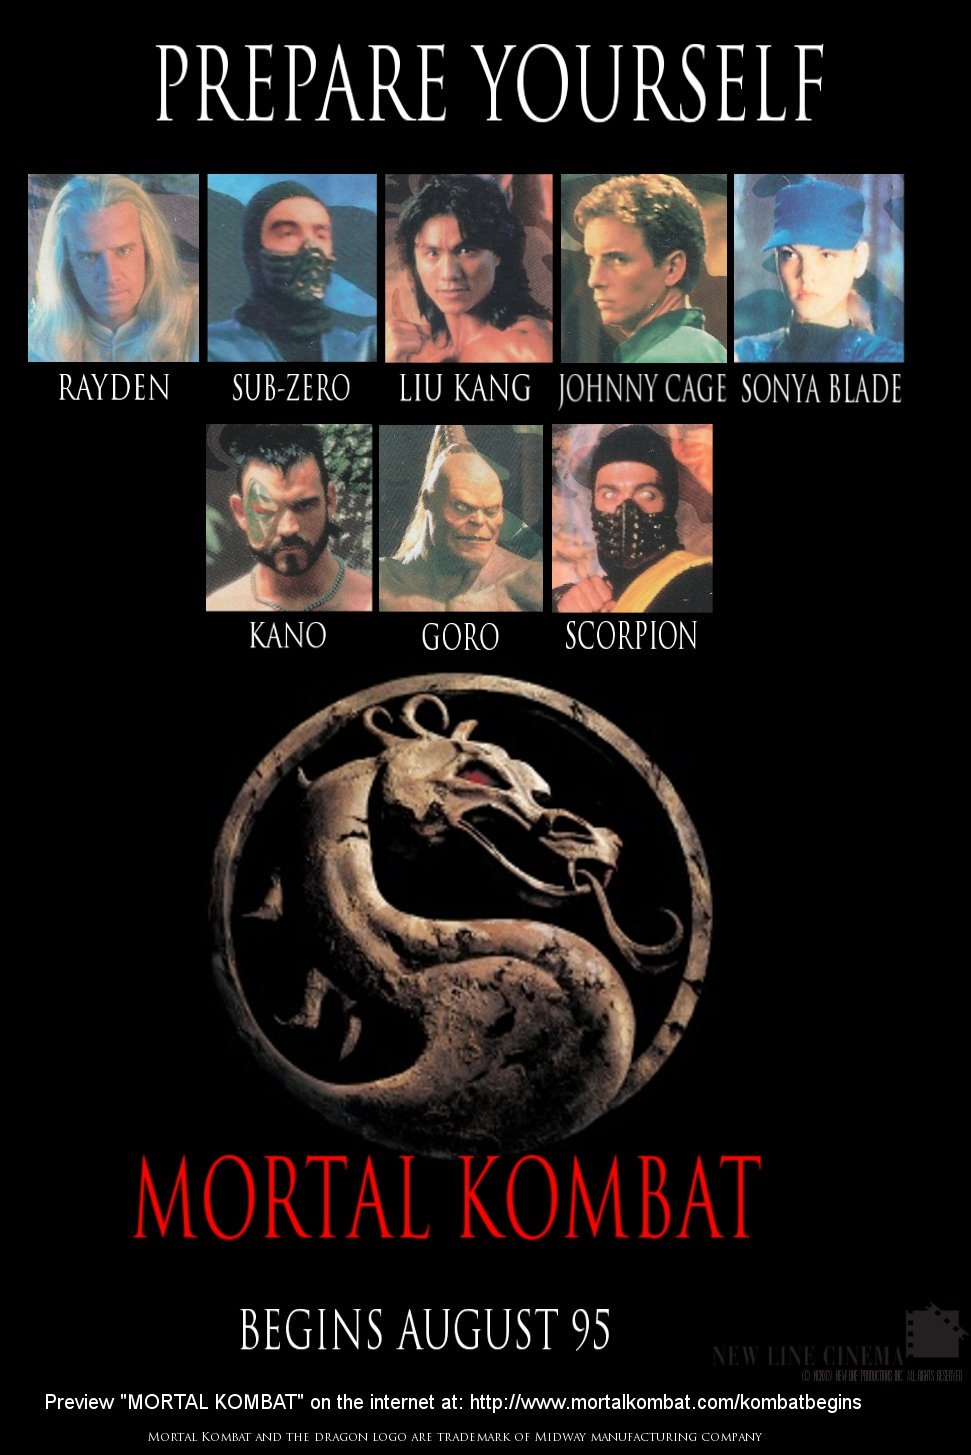 JUST_A_FXNAceKombat on X: Mortal Kombat Trilogy (August 26, 1996